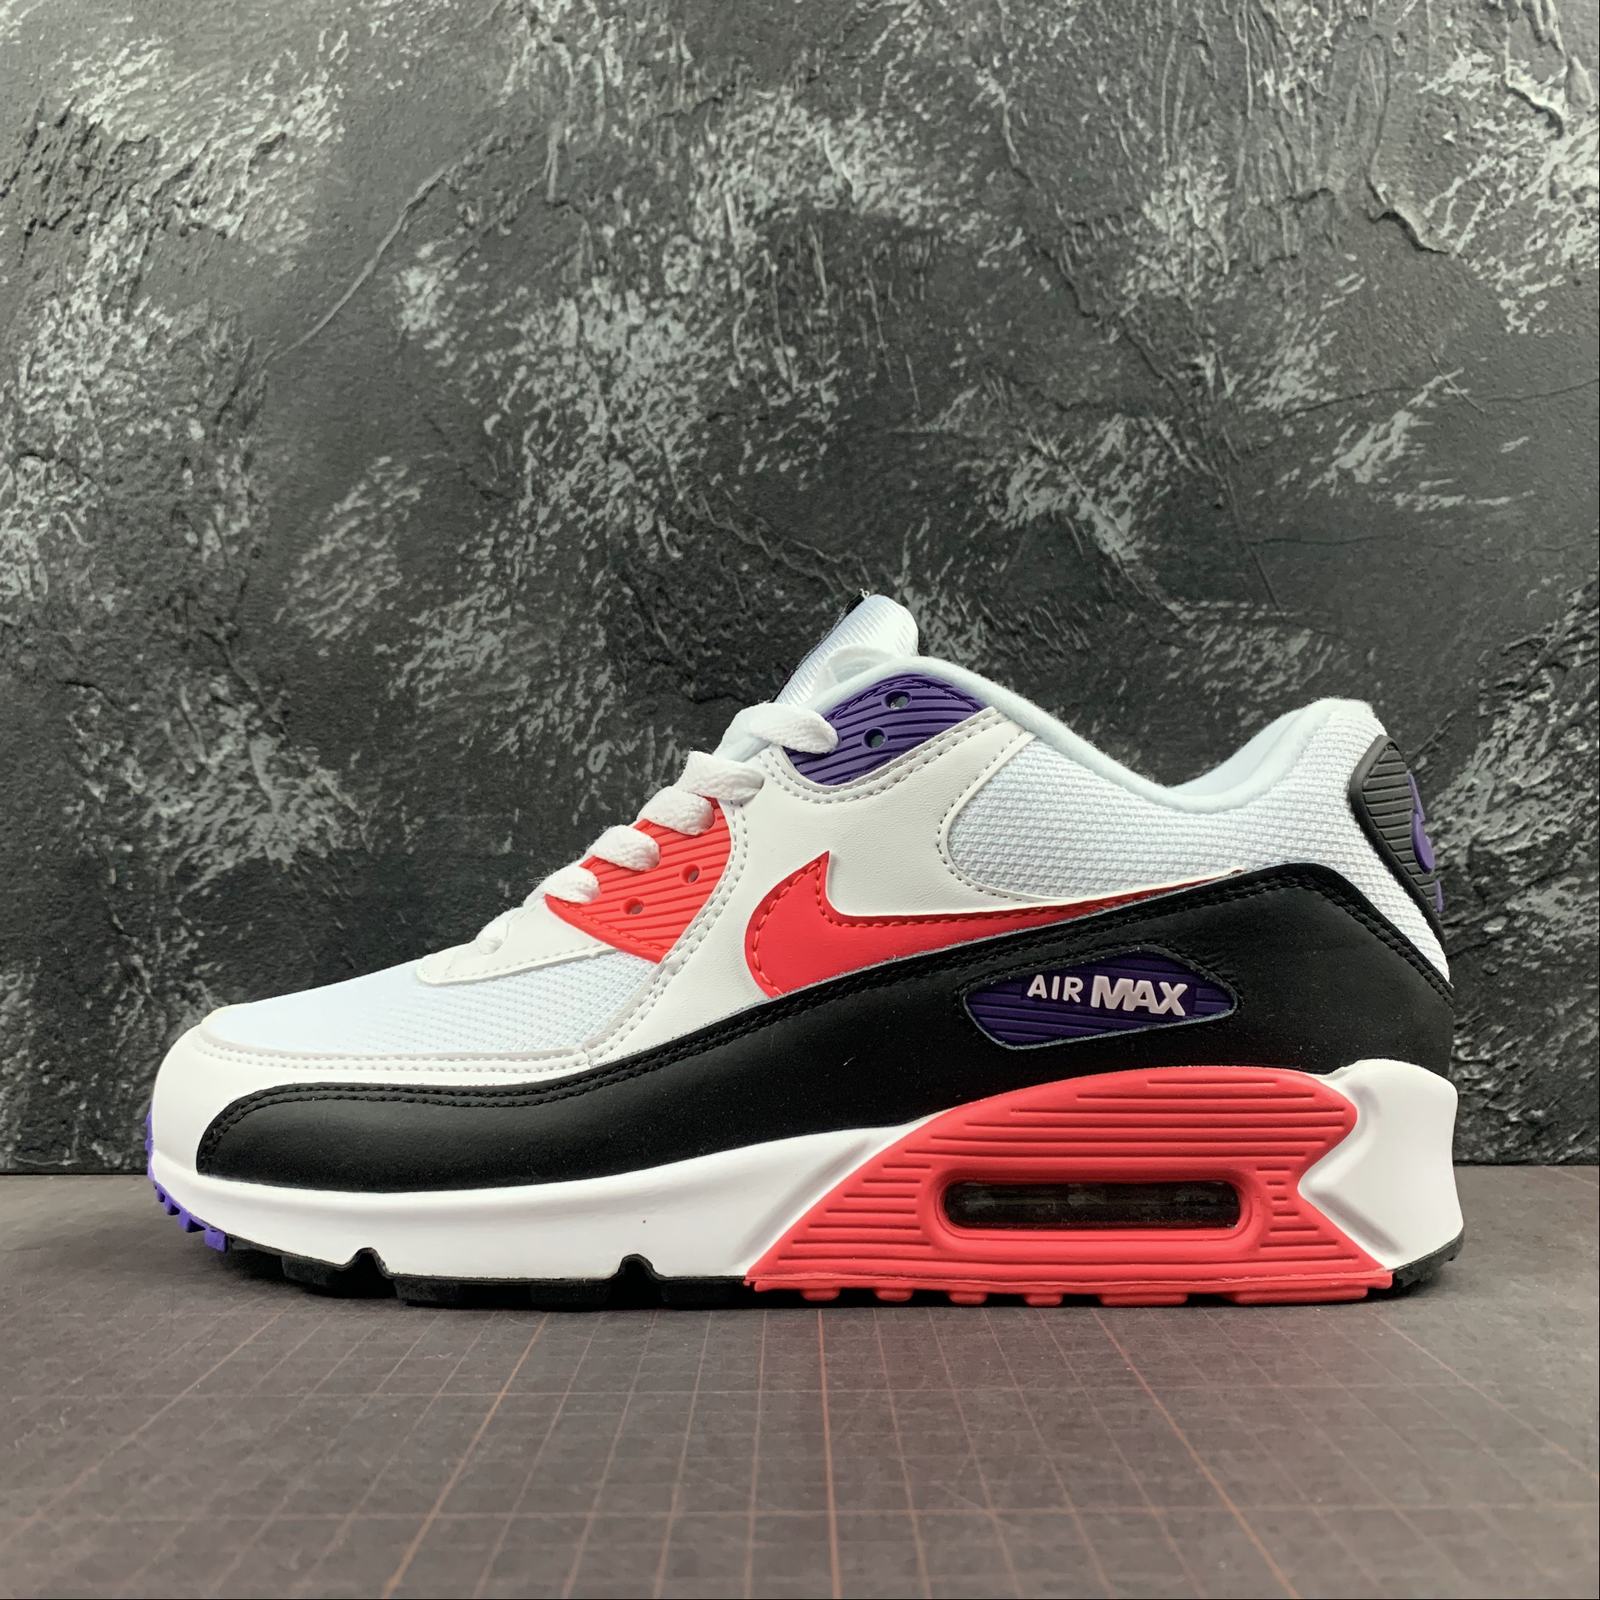 air max 90 purple red